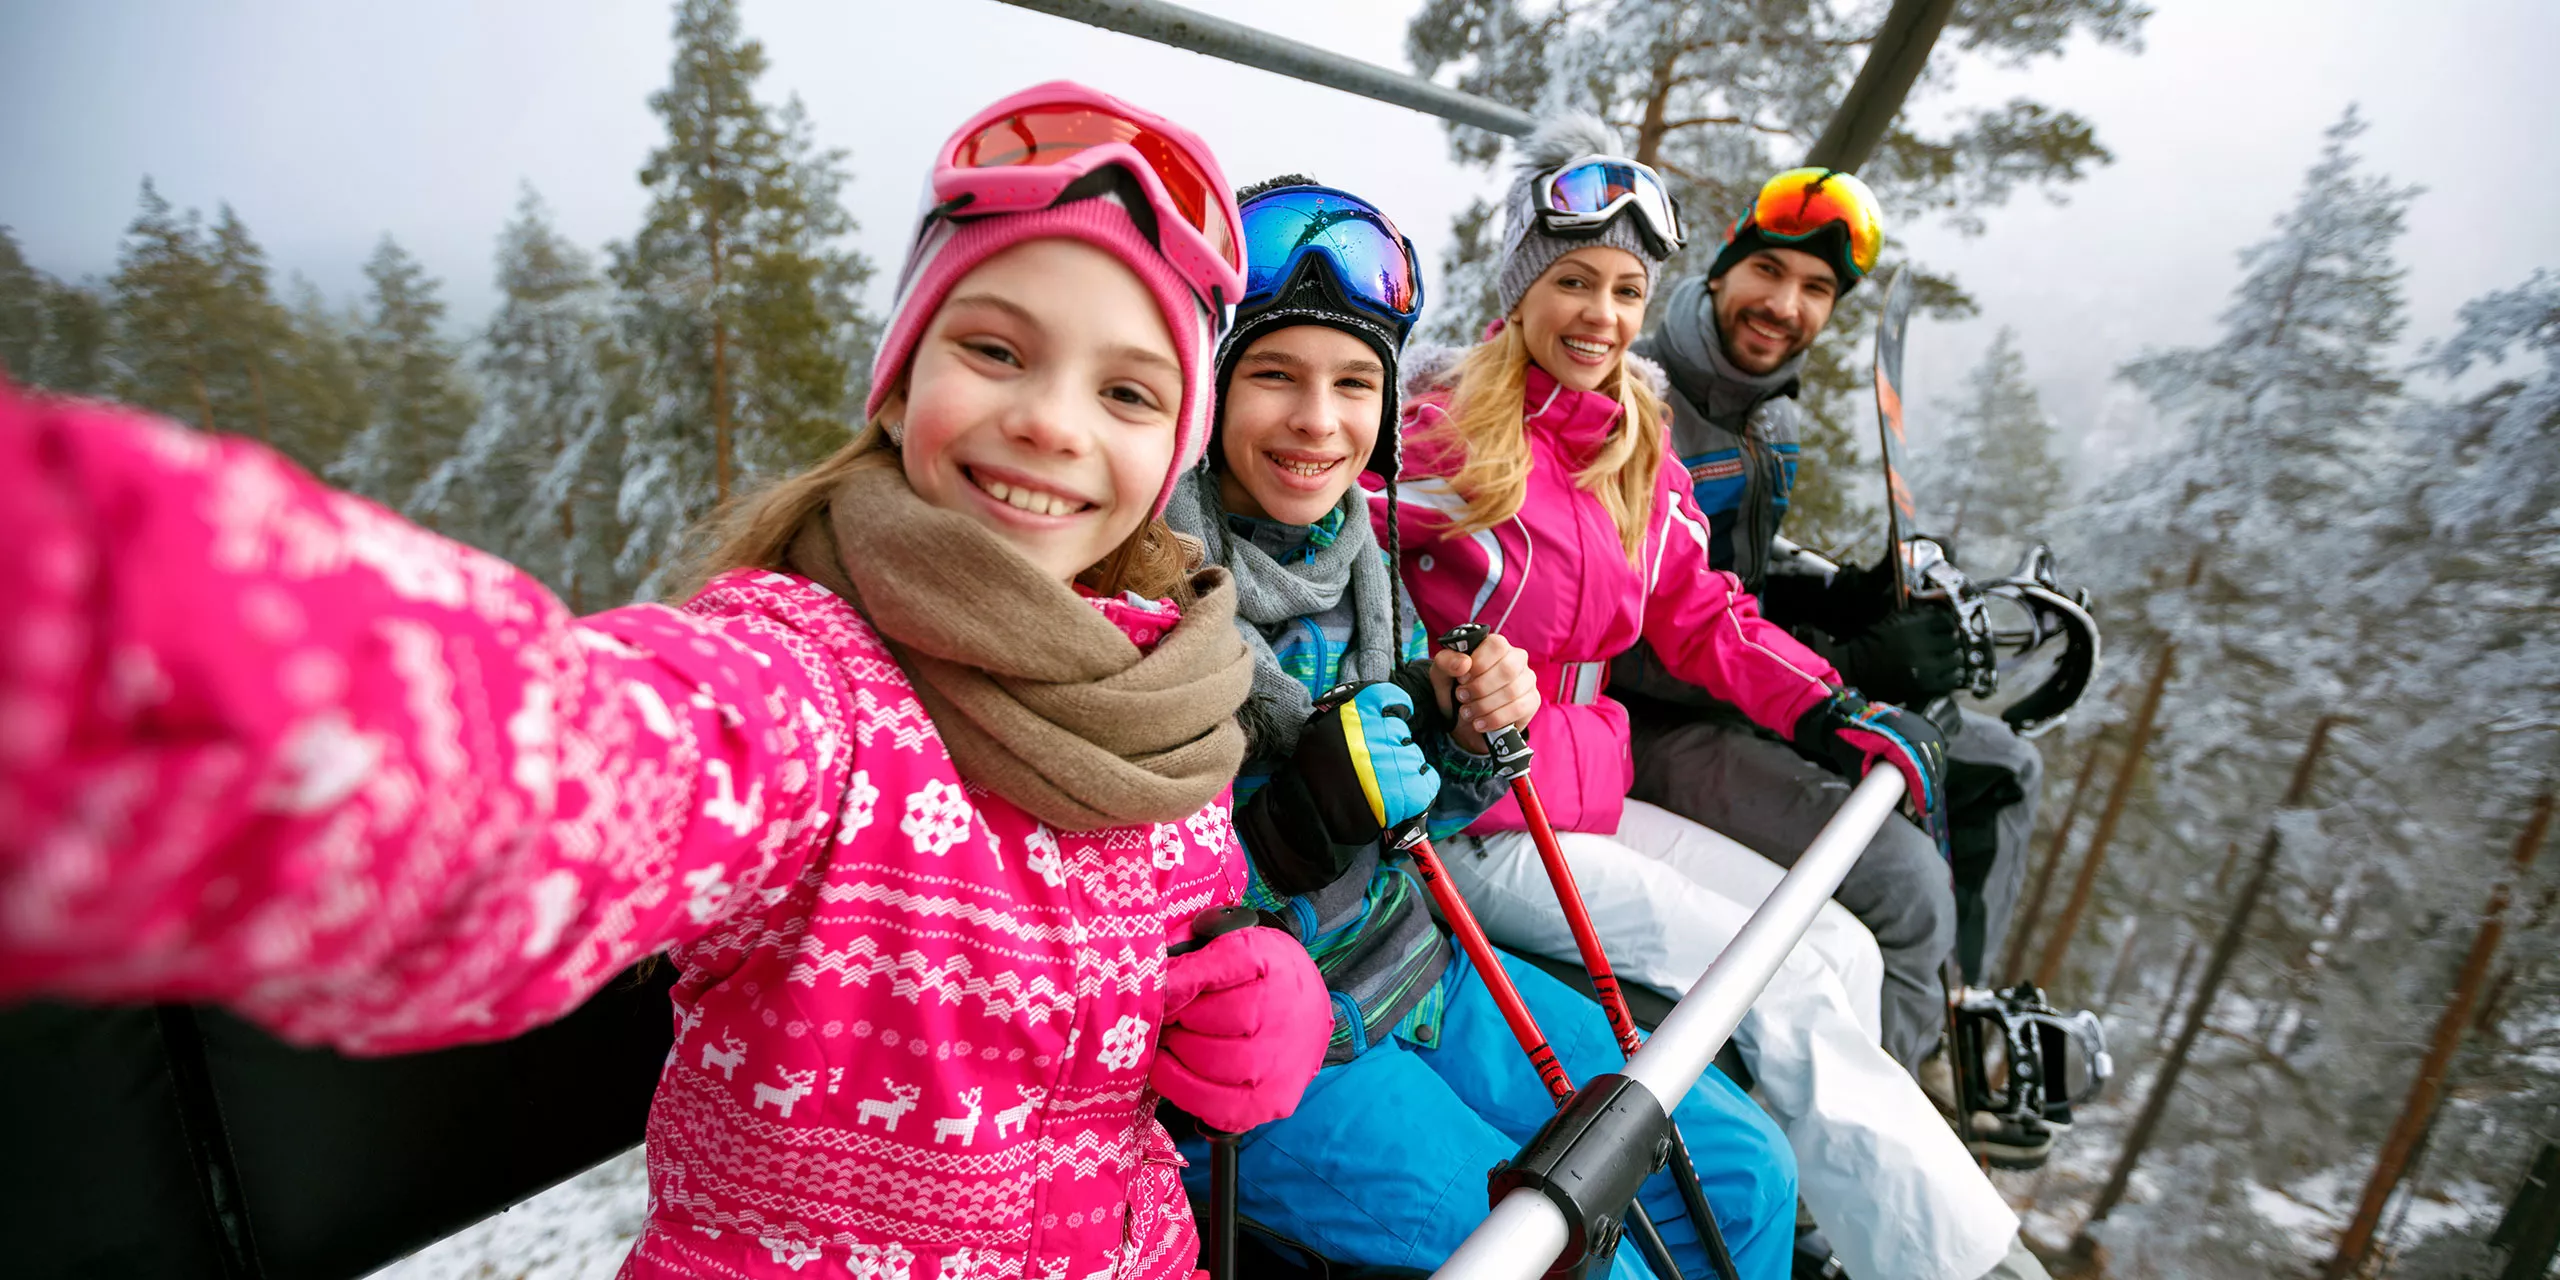 SKID Ski School in Hungary, Europe | Snowboarding,Skiing - Rated 0.9